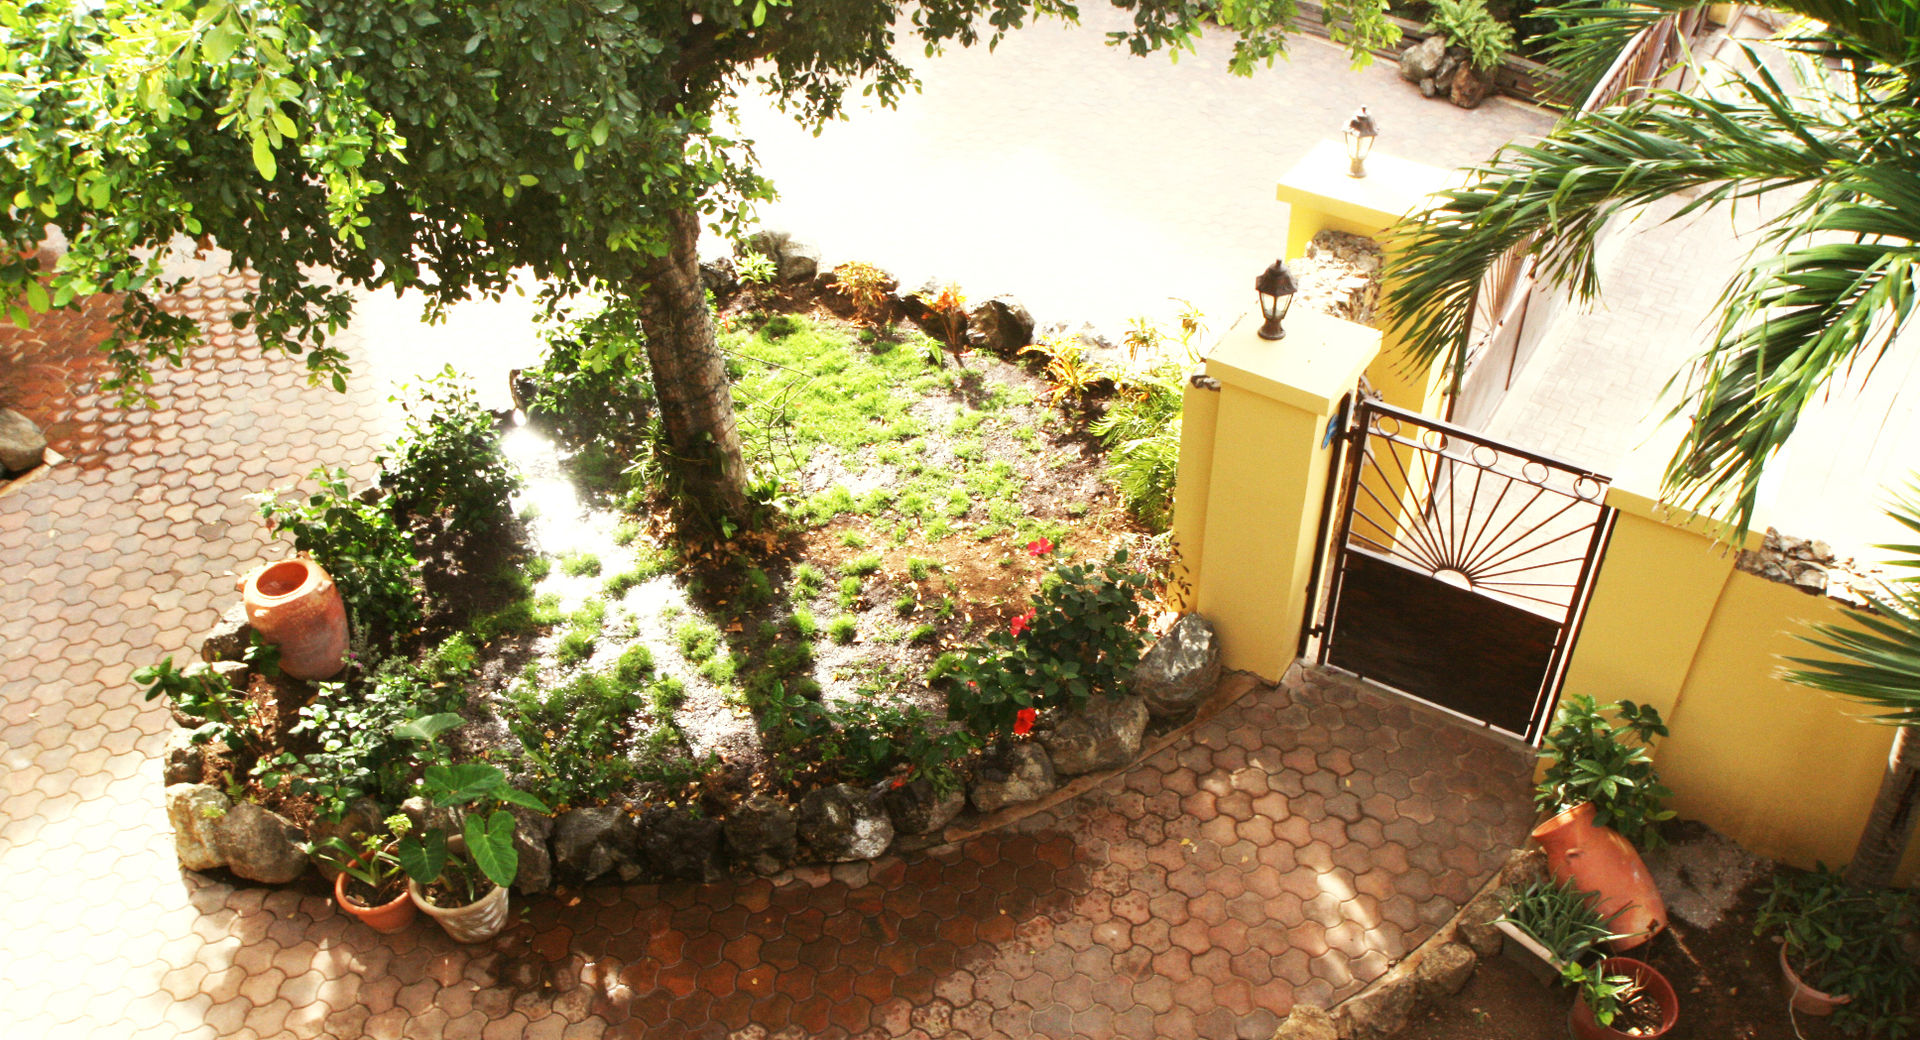 Casa Rokx, Willemstad Curaçao, architectenbureau Aerlant Cloin BNA architectenbureau Aerlant Cloin BNA Tropikal Bahçe